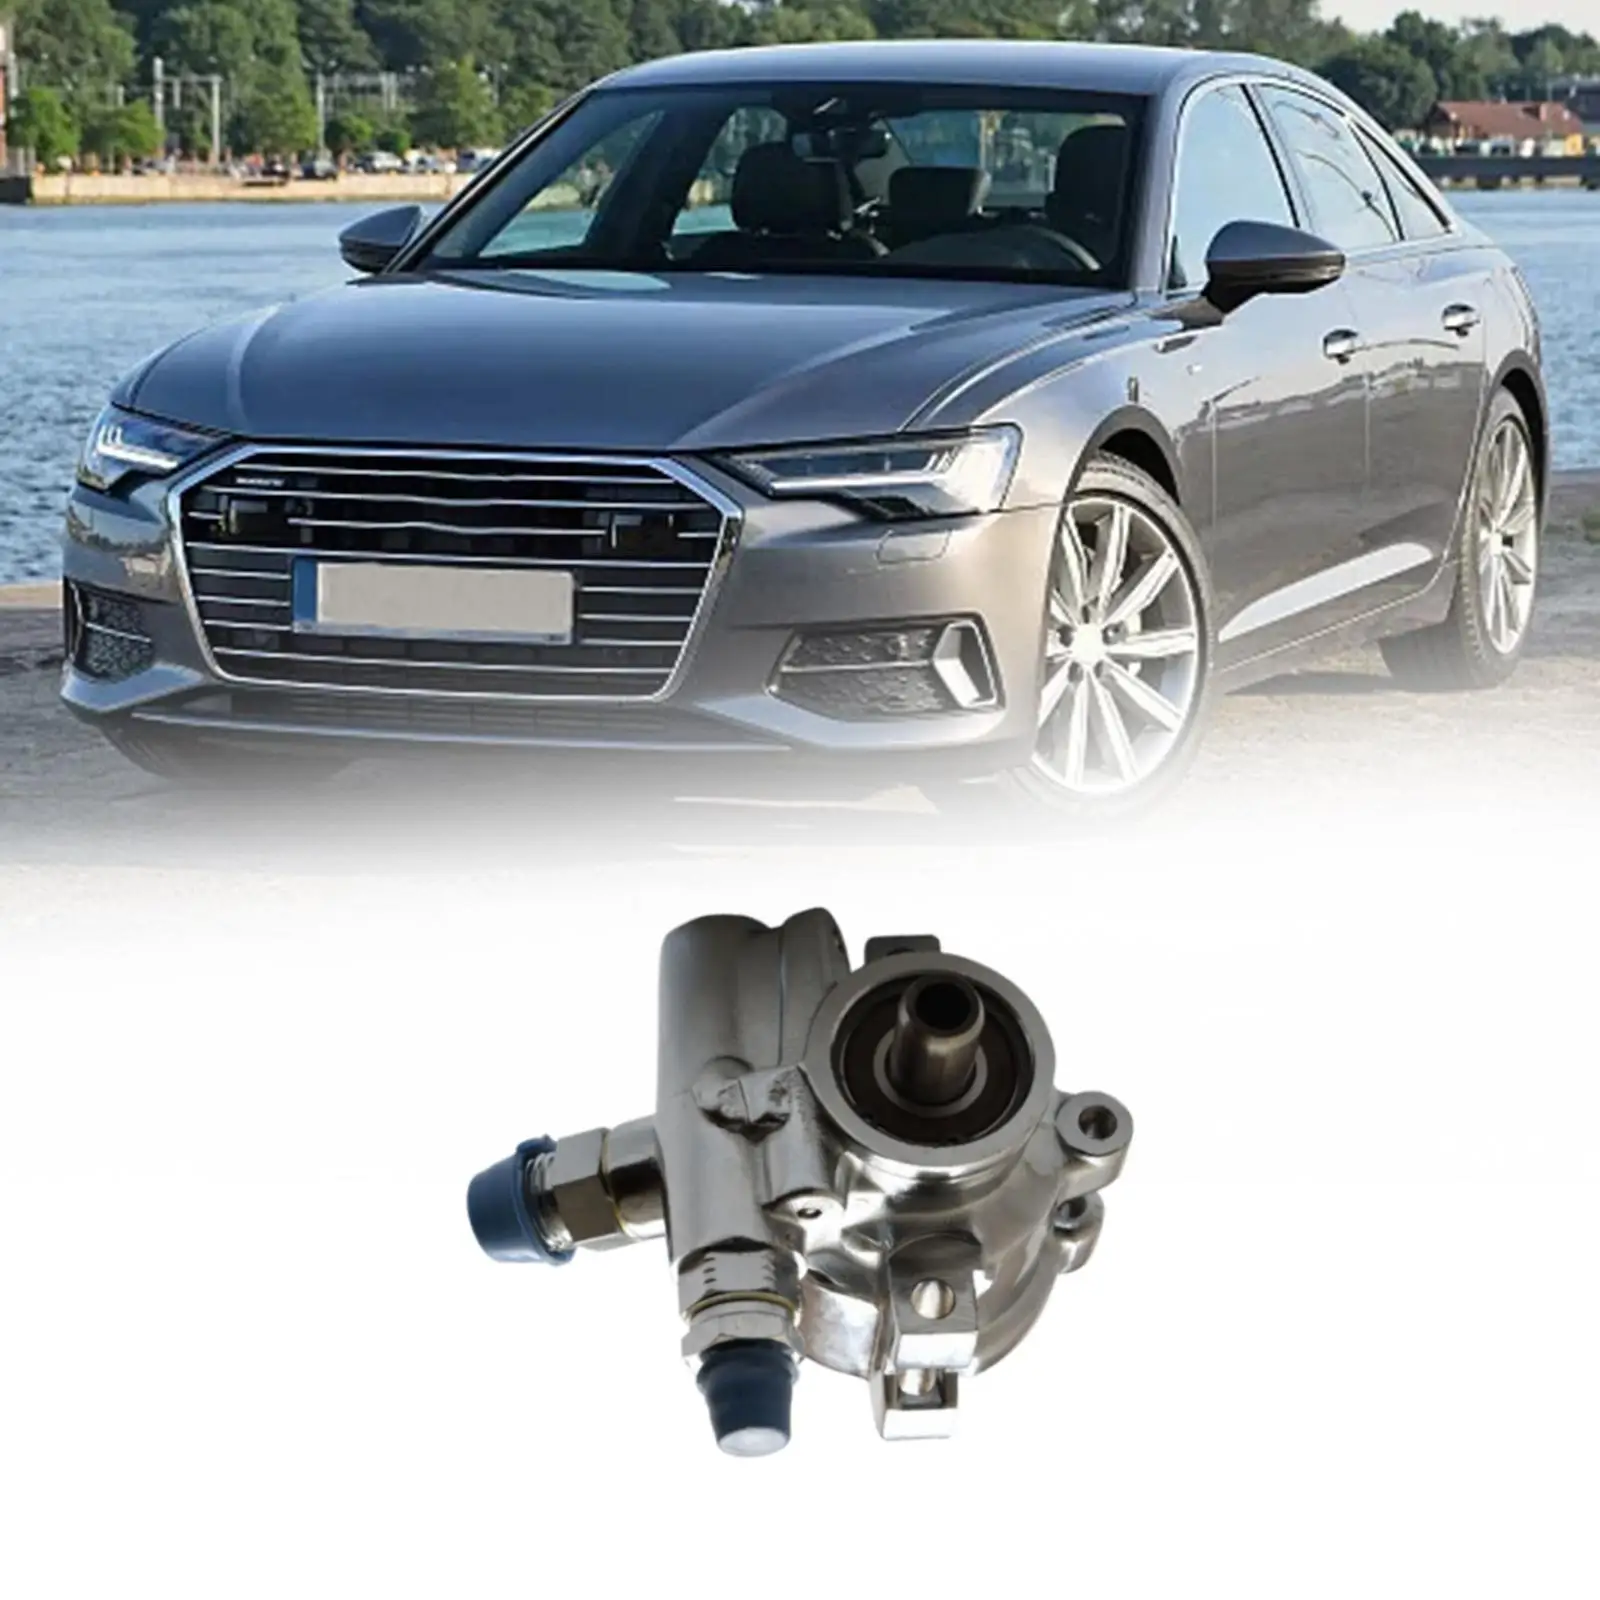 Power Steering Pump Car Accessories Practical for Type 2 Repair Part High Performance Easy Installation Premium